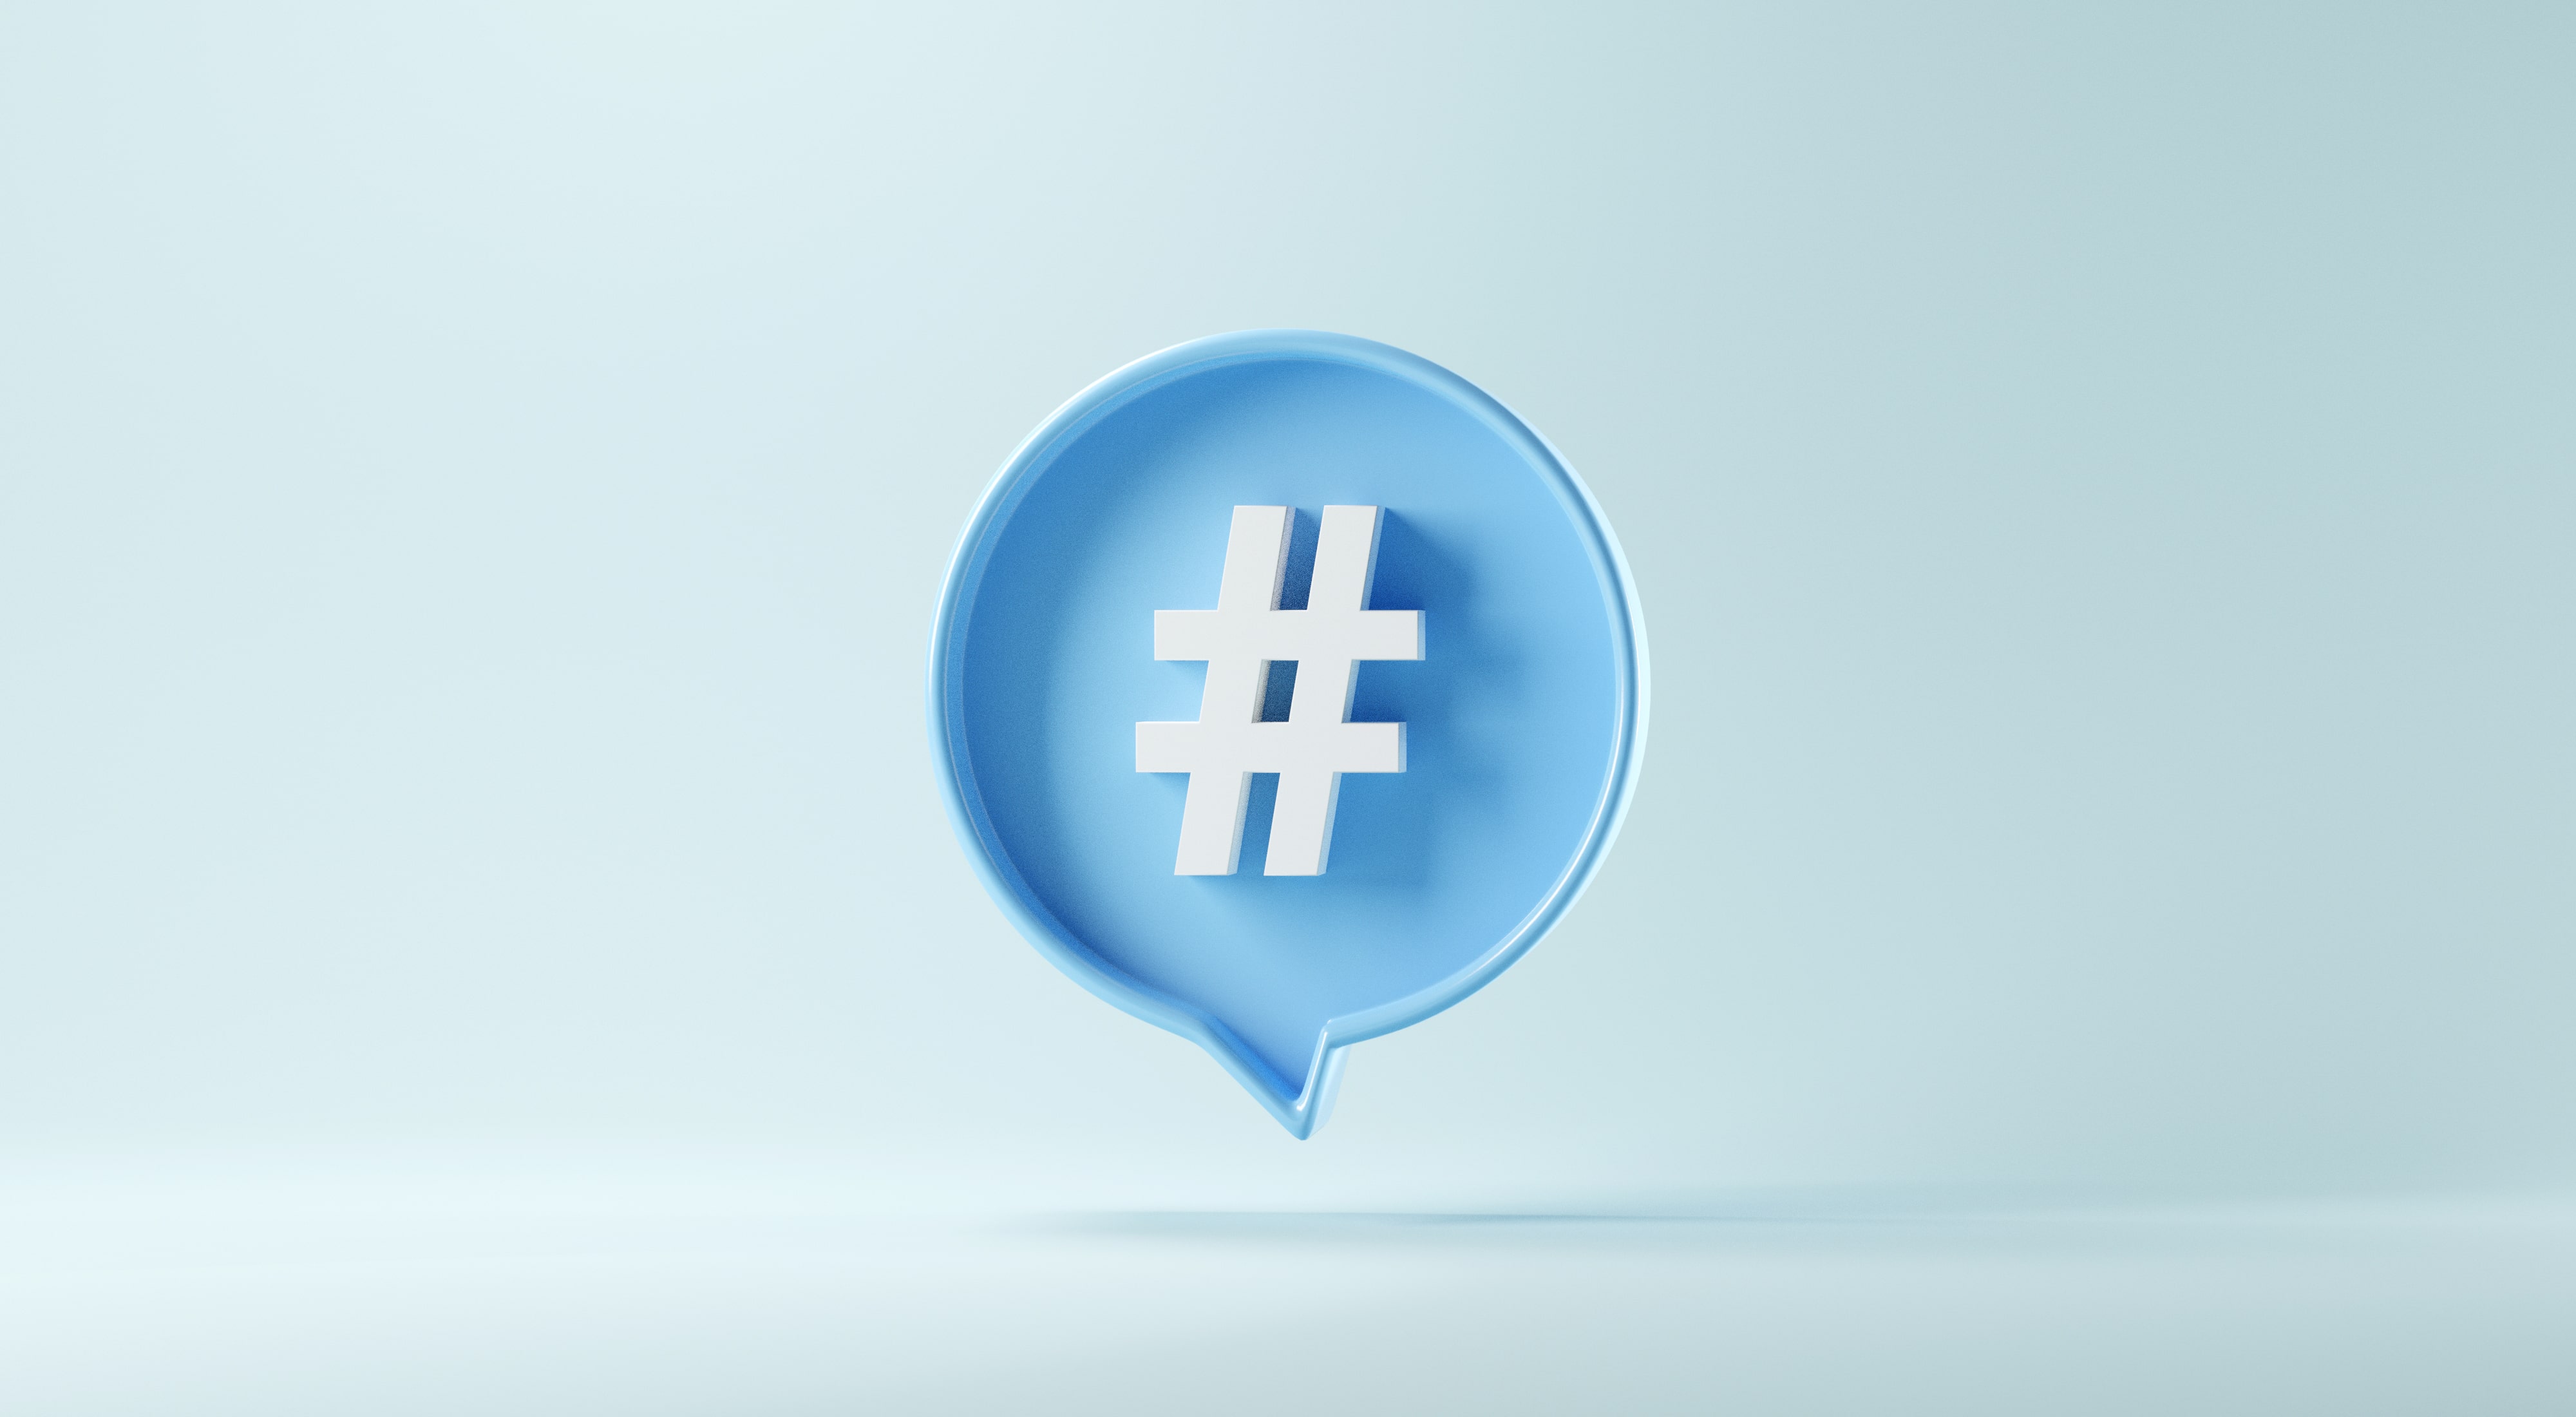 social media keywords and hashtags